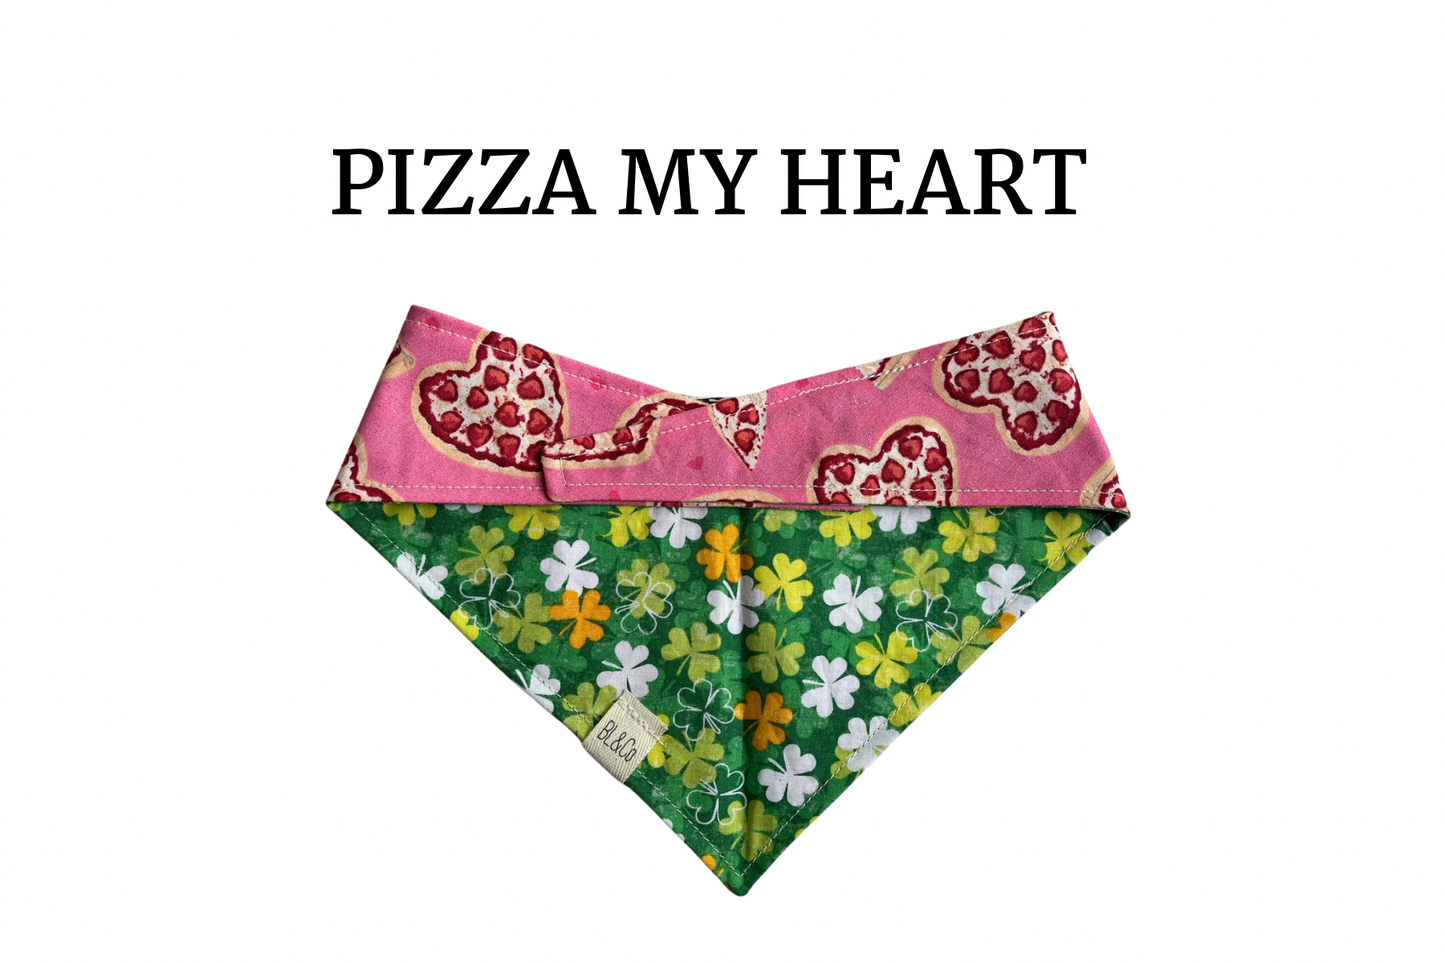 Heart shaped Pizza Pies & Shamrocks Reversible Tie/On Bandana